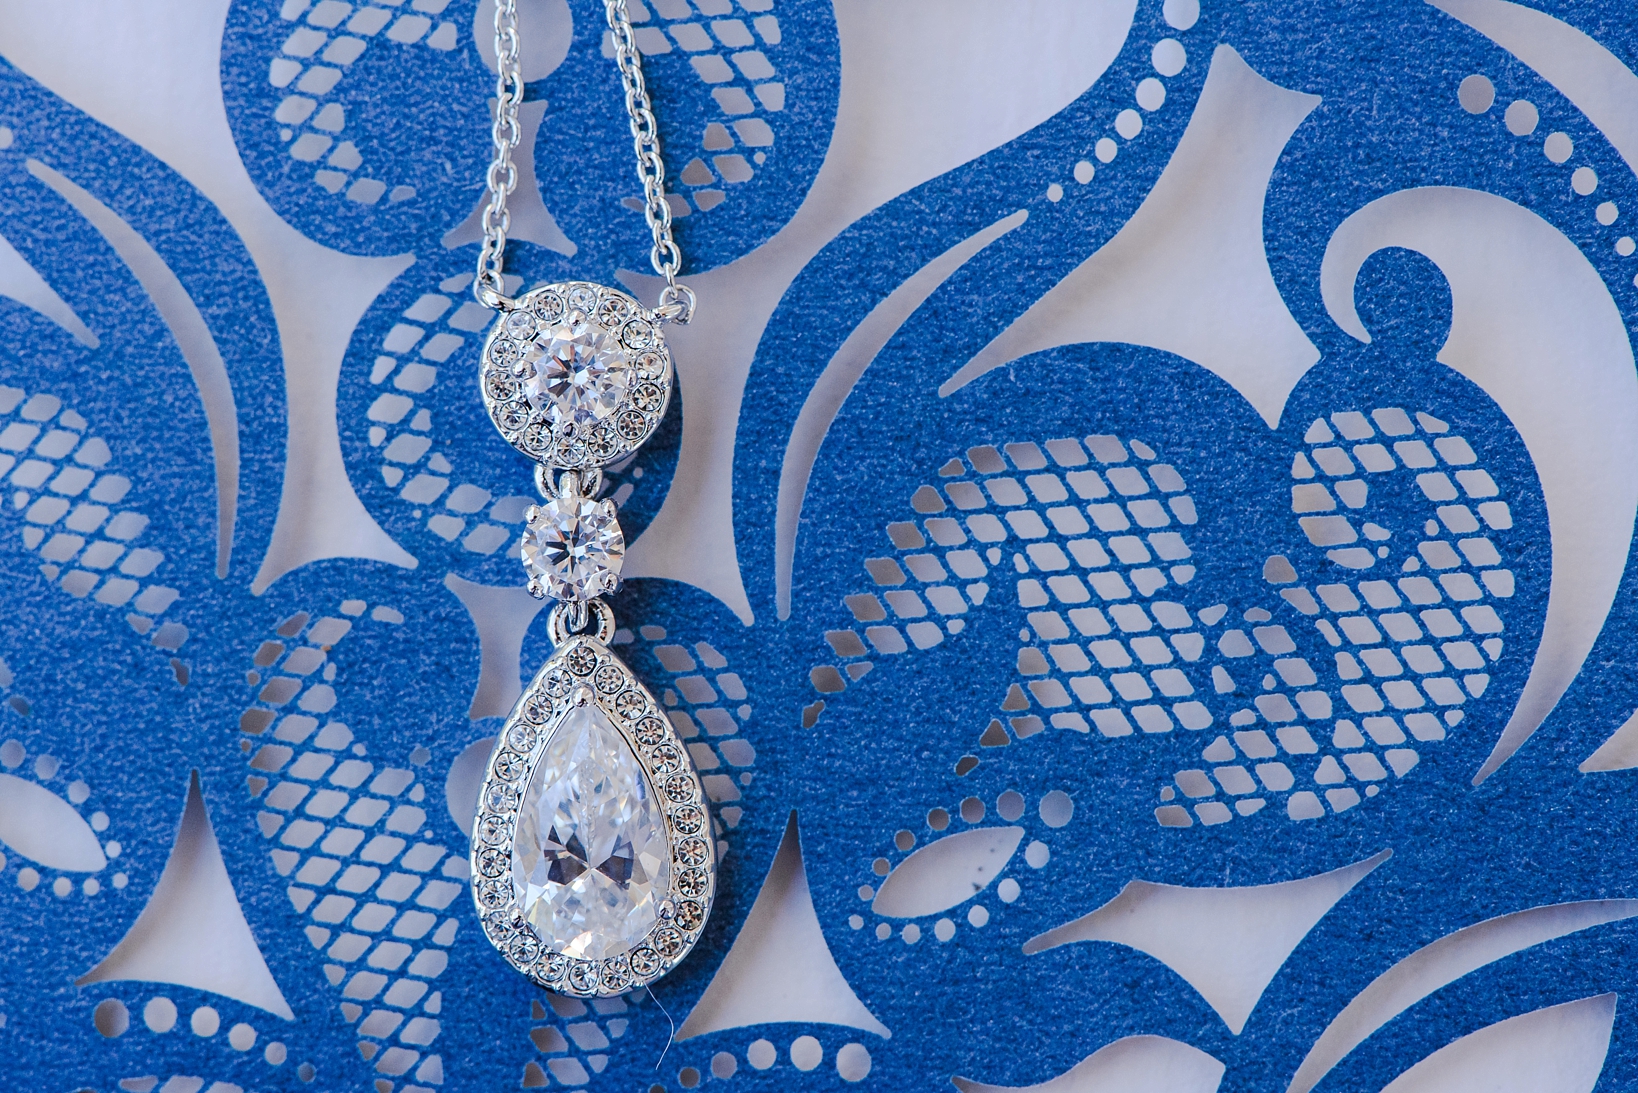 Bride's necklace against a lace-cut wedding invitation